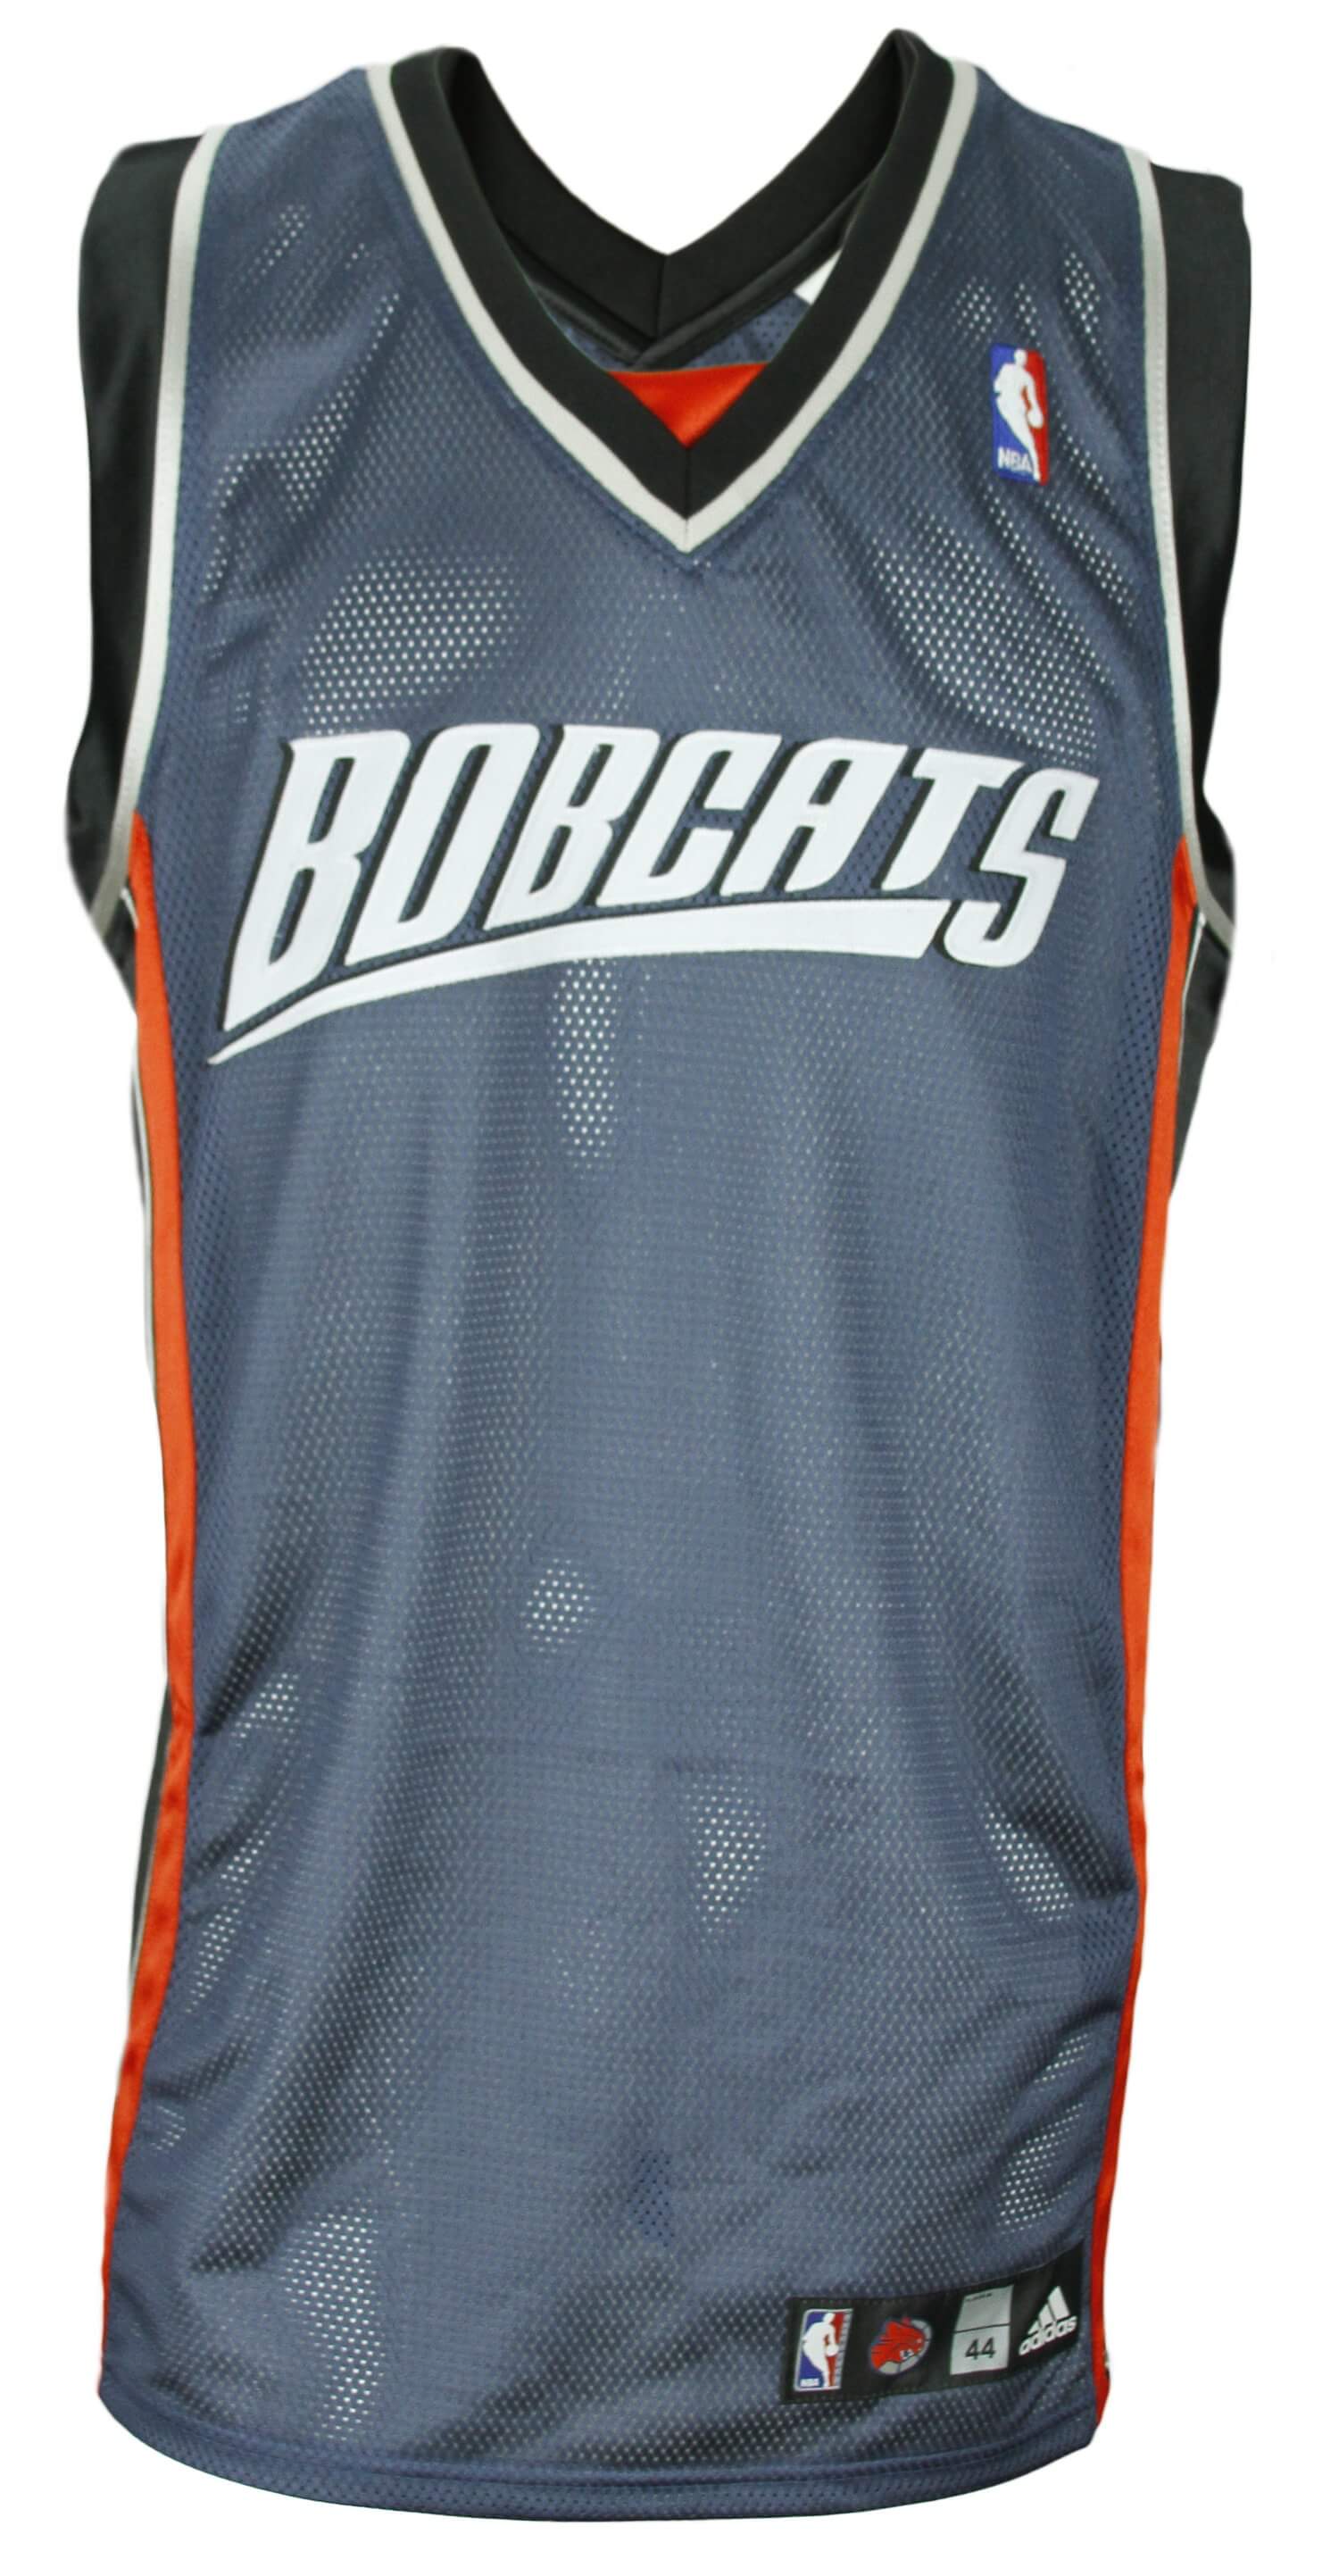 Adidas NBA Basketball Youth Charlotte Bobcats Practice Tee Shirt, Navy